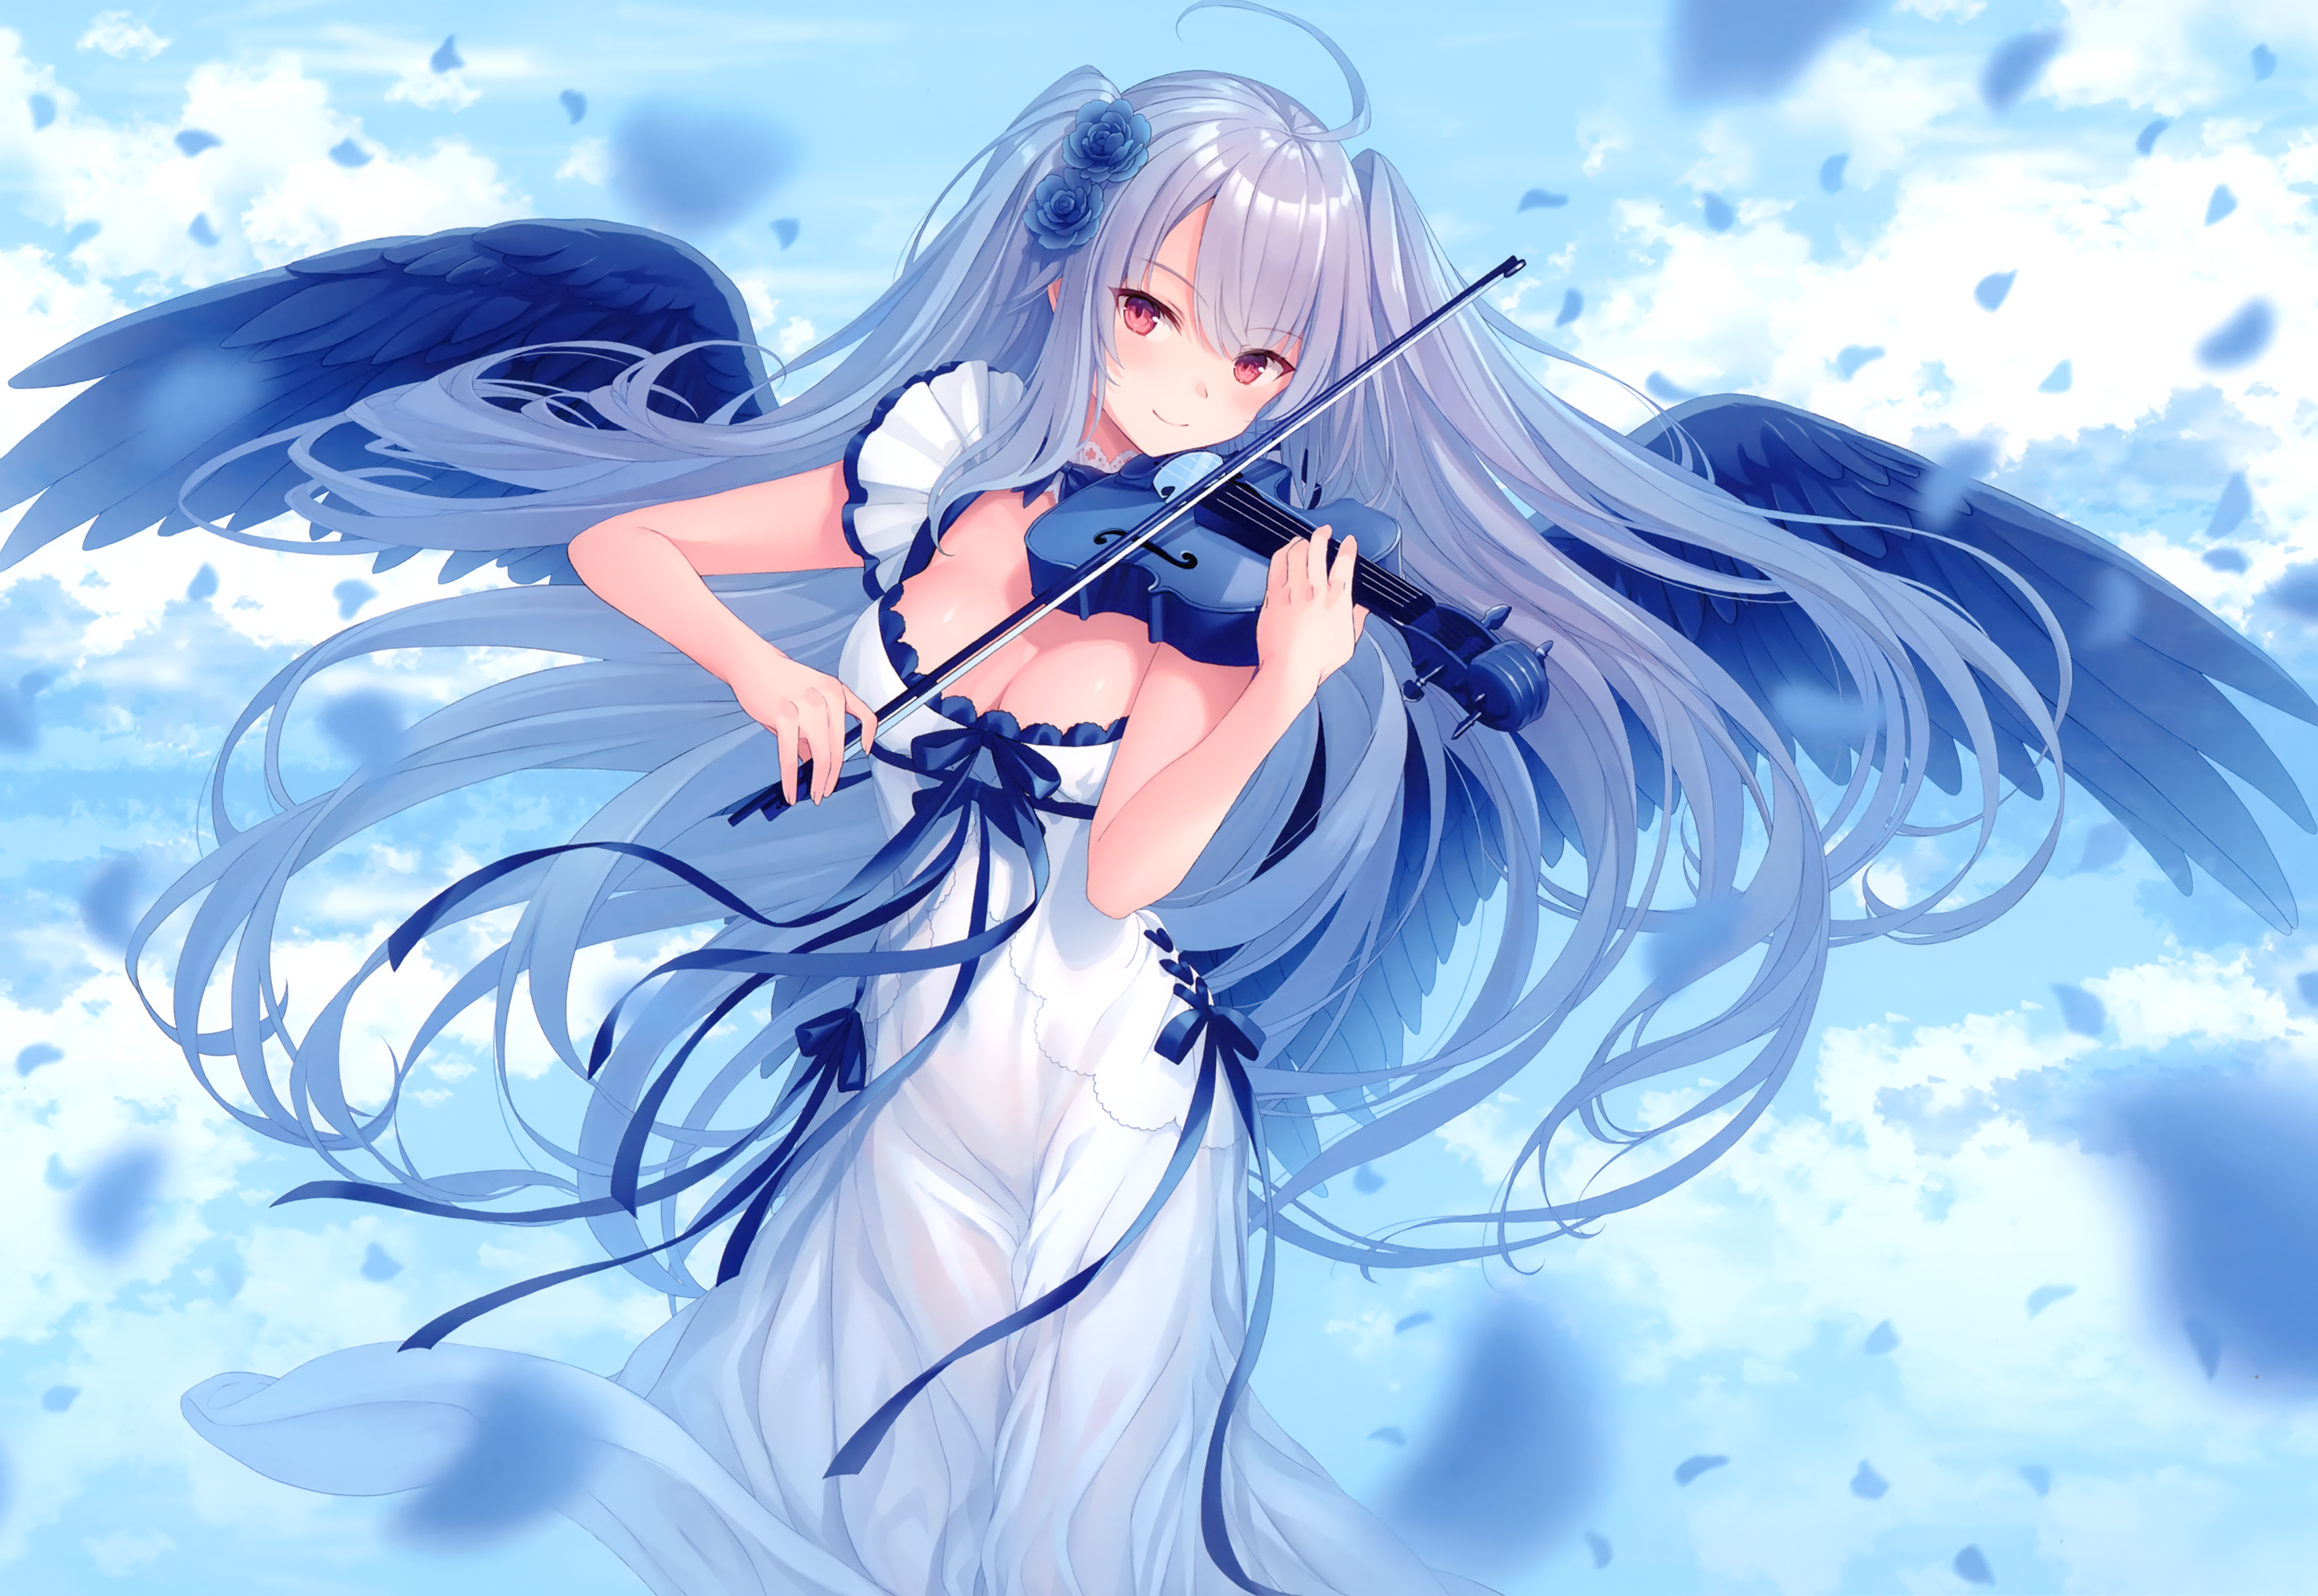 Dress Violin Instrument Sky Wings White Dress Flowers Grey Hair Anime 3426x2359